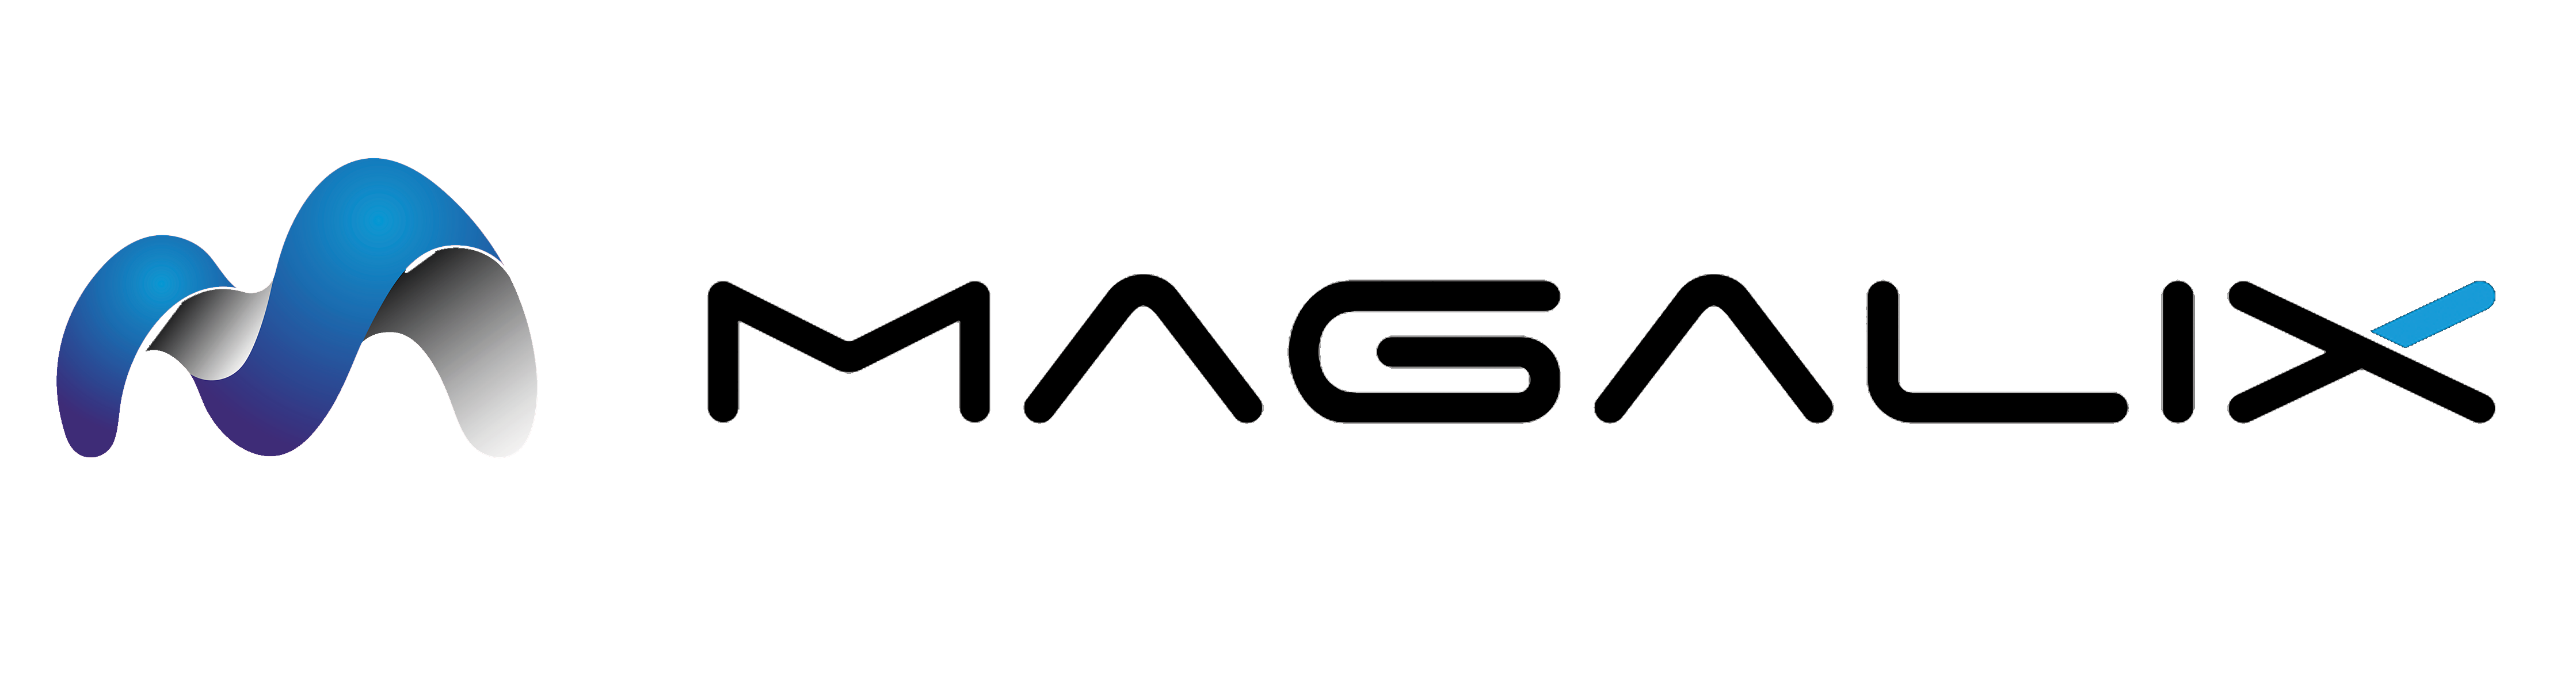 Magalix_logo.png